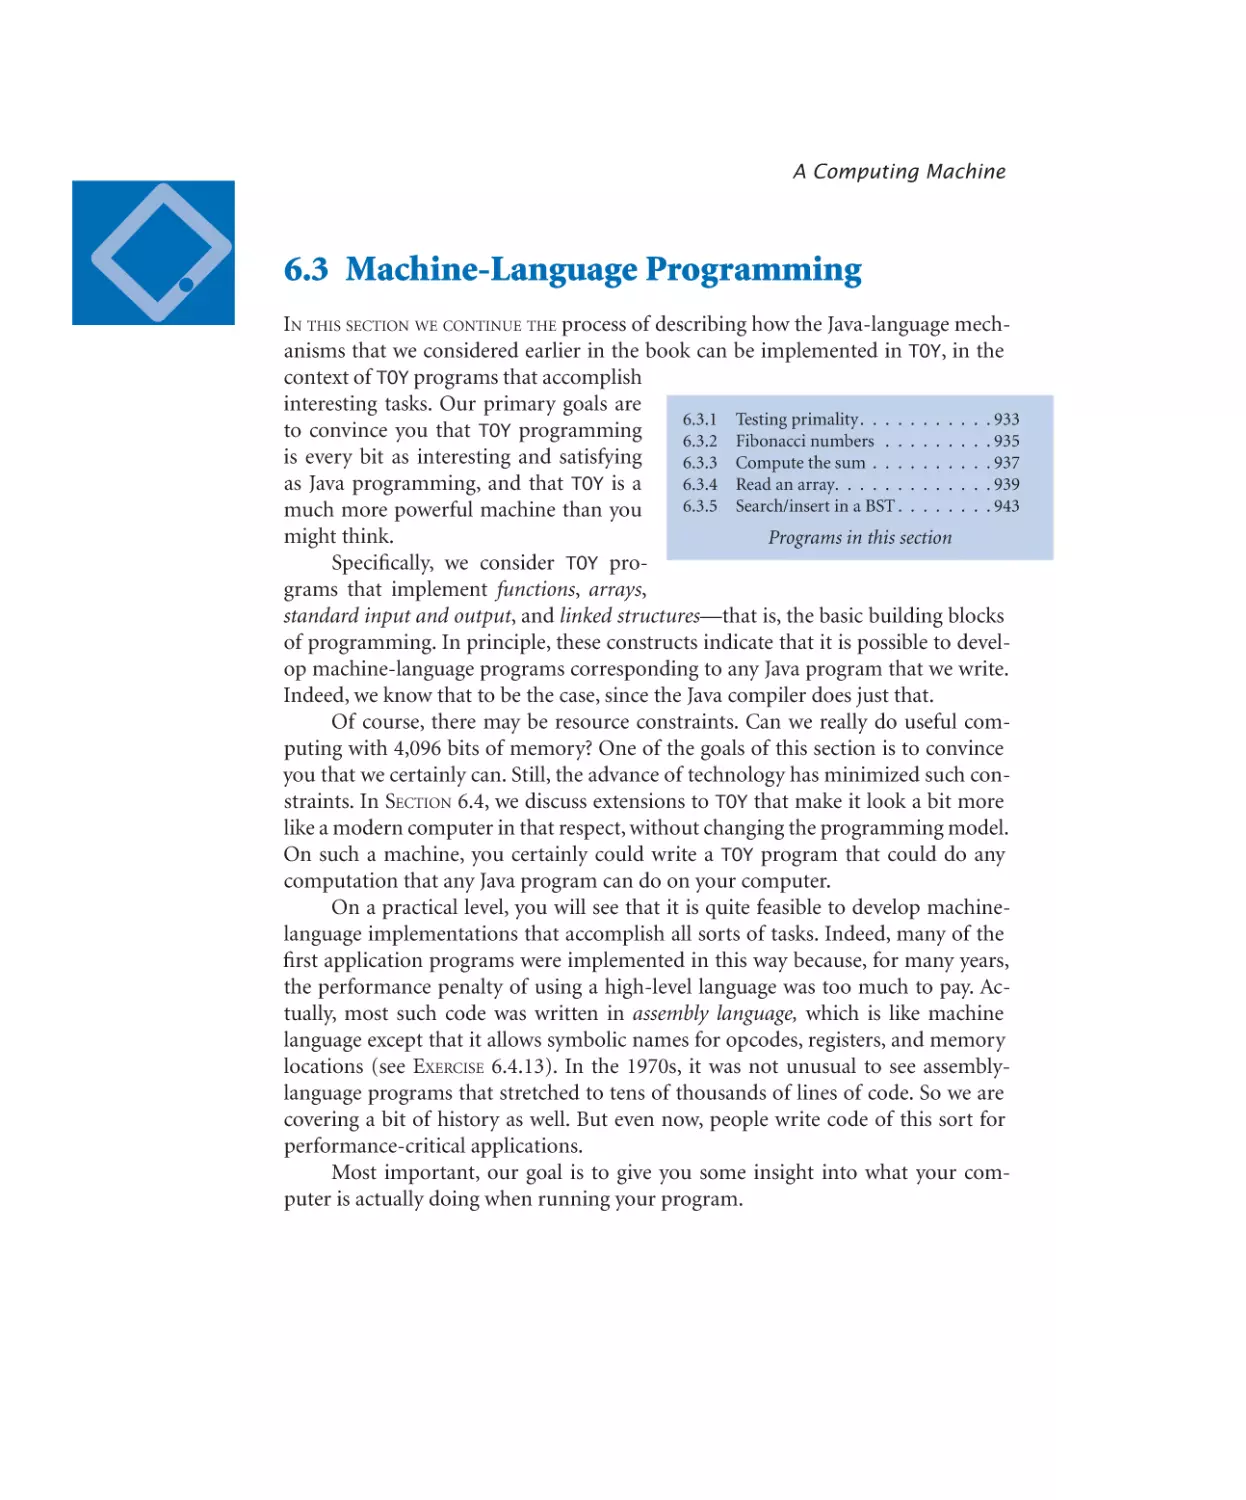 6.3 Machine-Language Programming